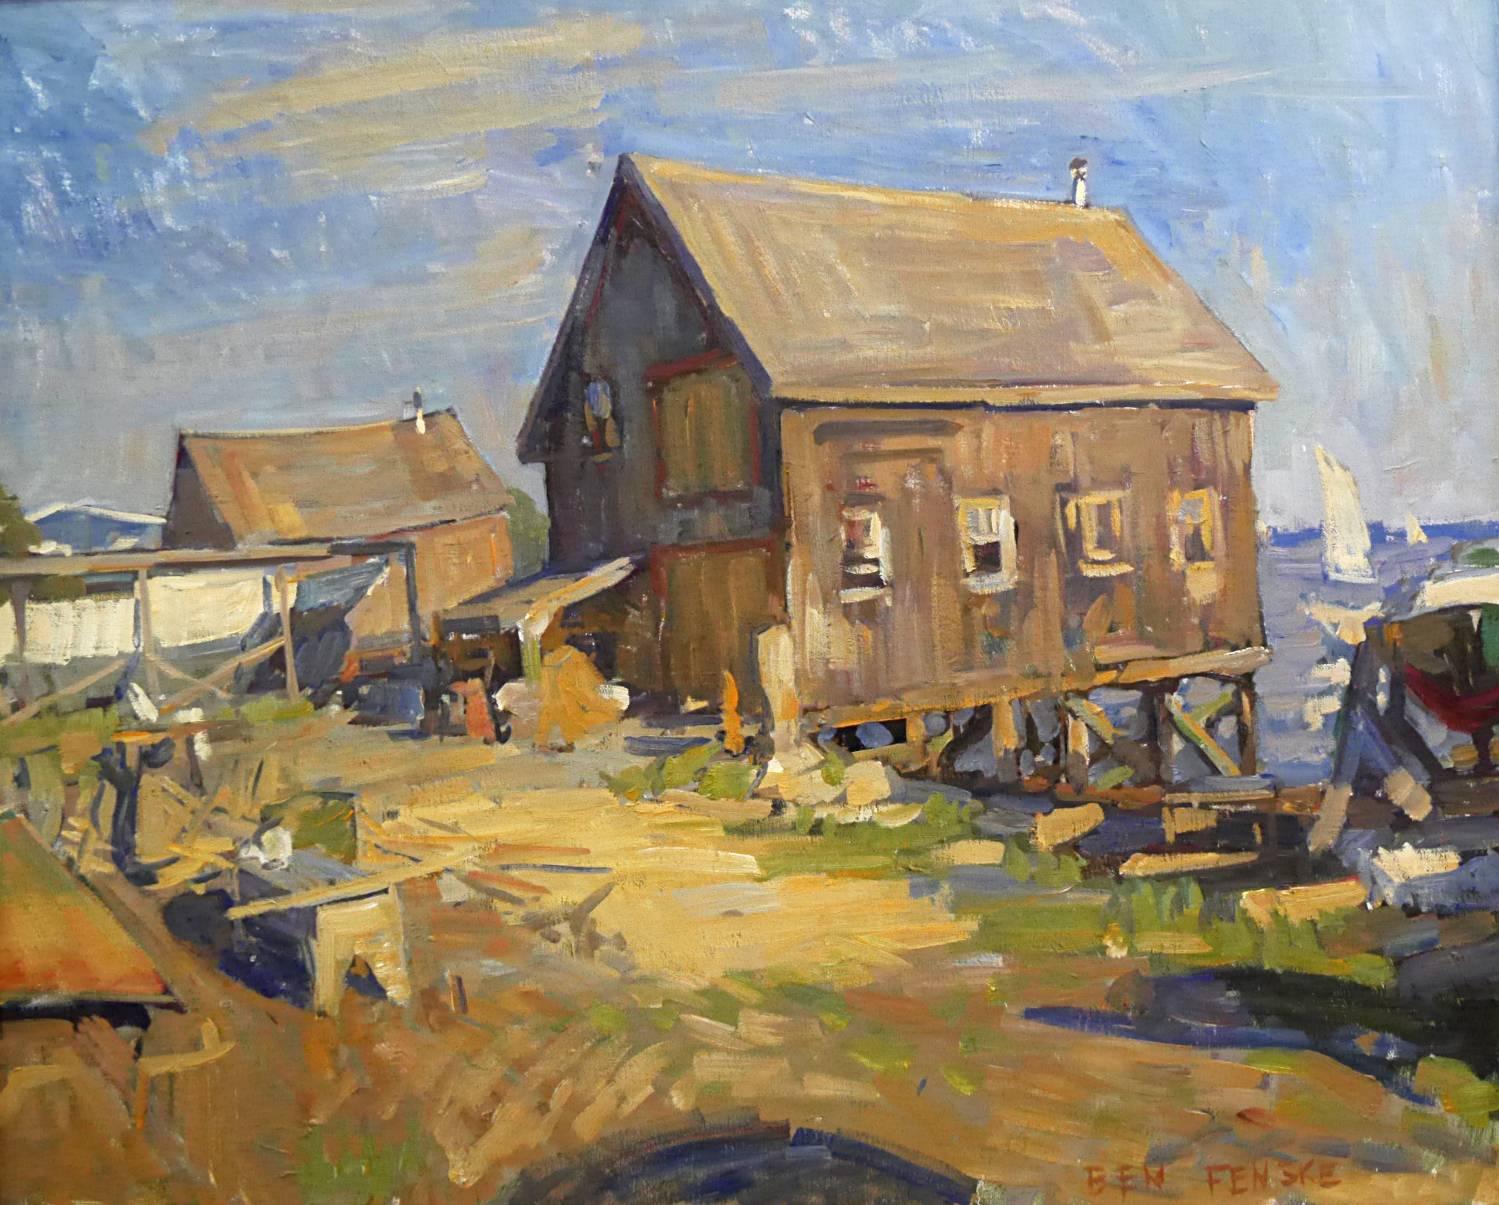 Ben Fenske Landscape Painting - "Boathouse, Evening Light" contemporary impressionist oil painting en plein air